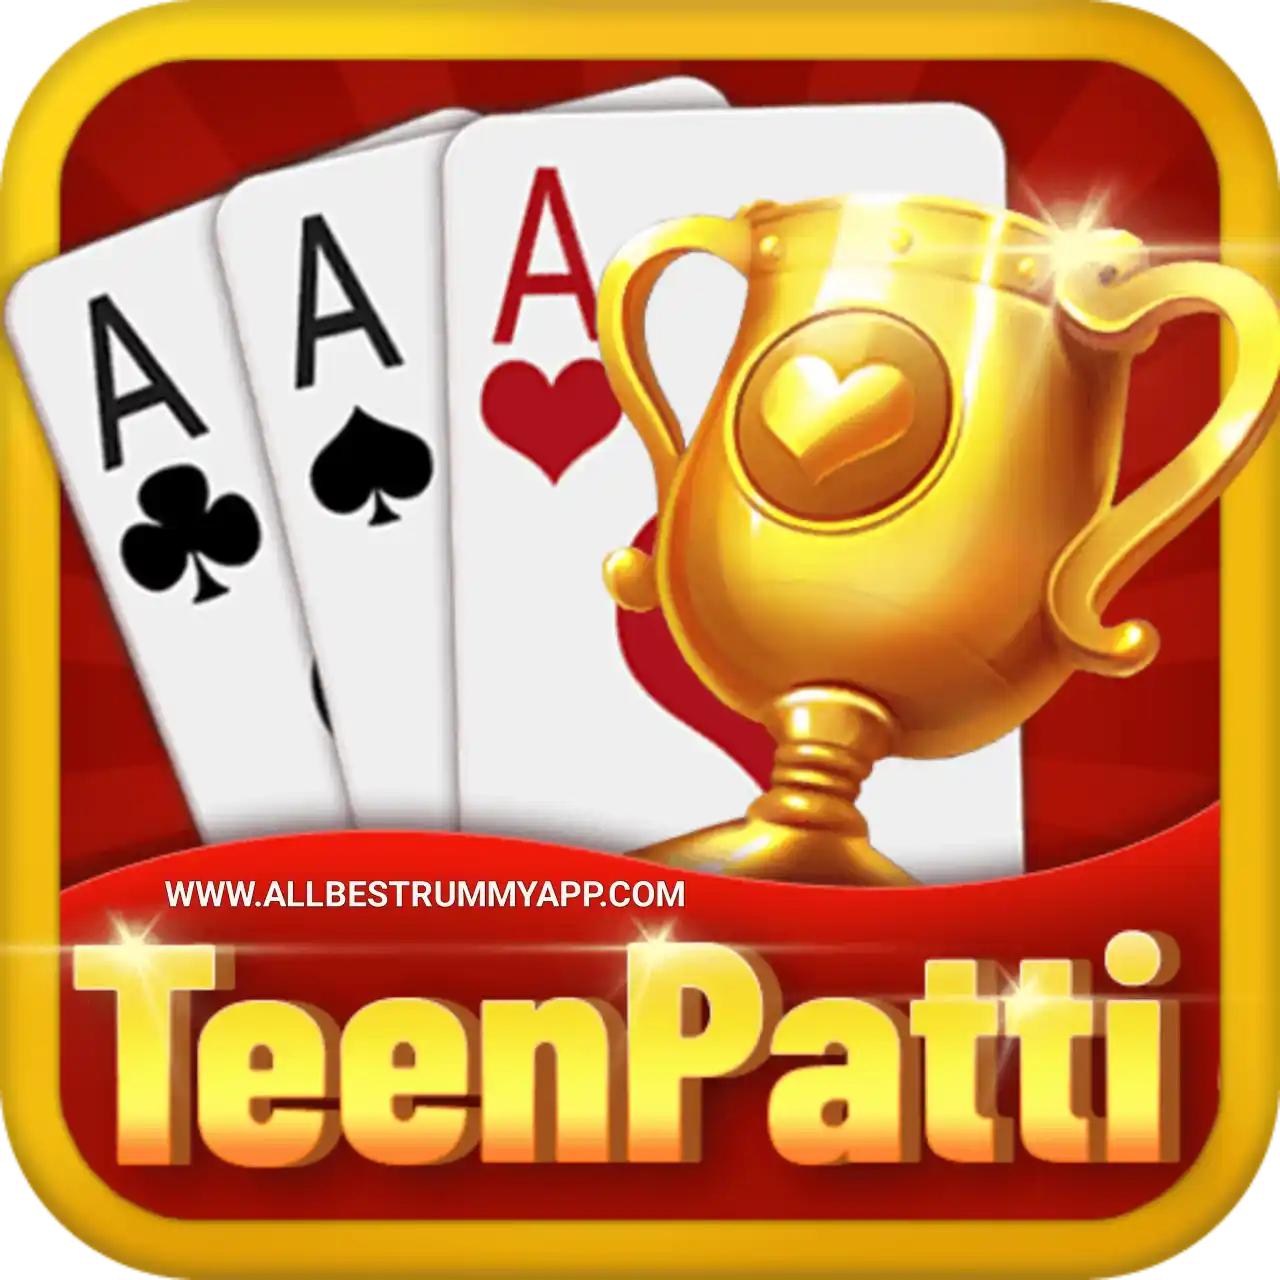 Teen Patti Master - New Rummy App